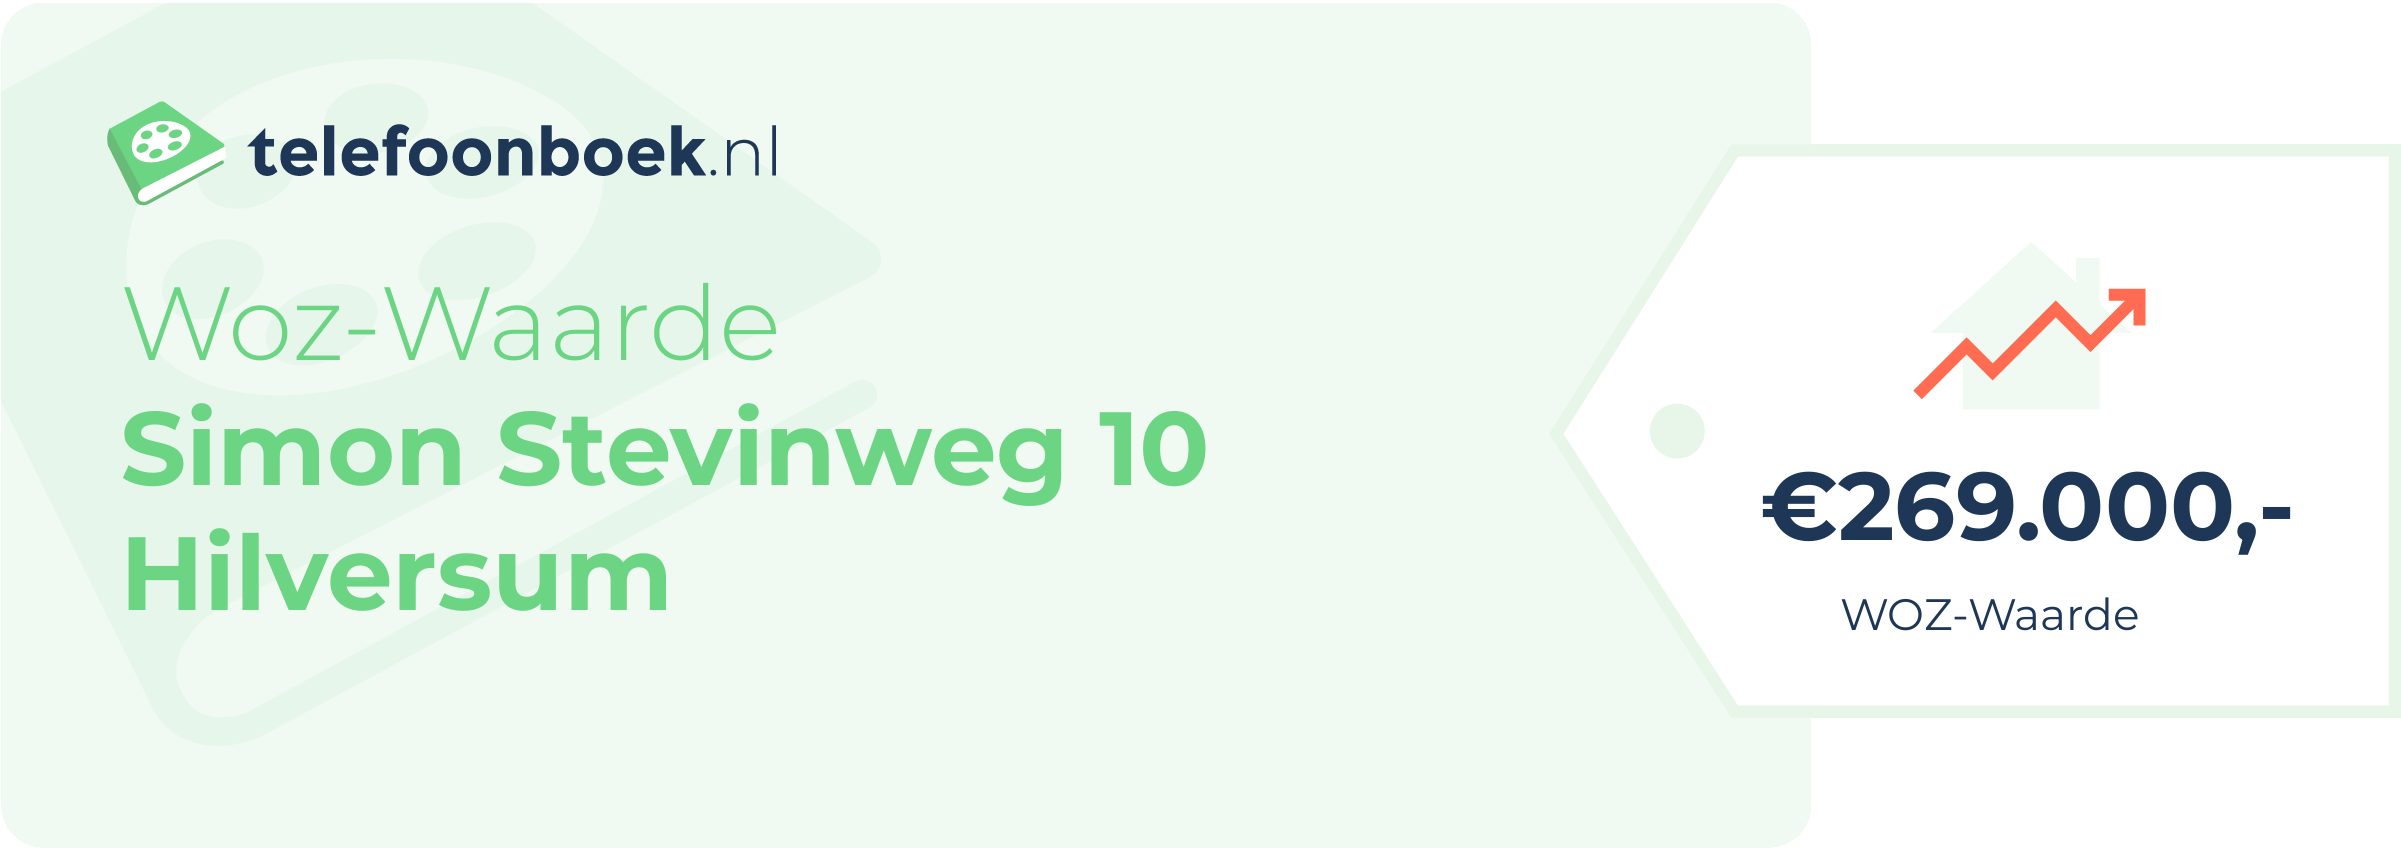 WOZ-waarde Simon Stevinweg 10 Hilversum